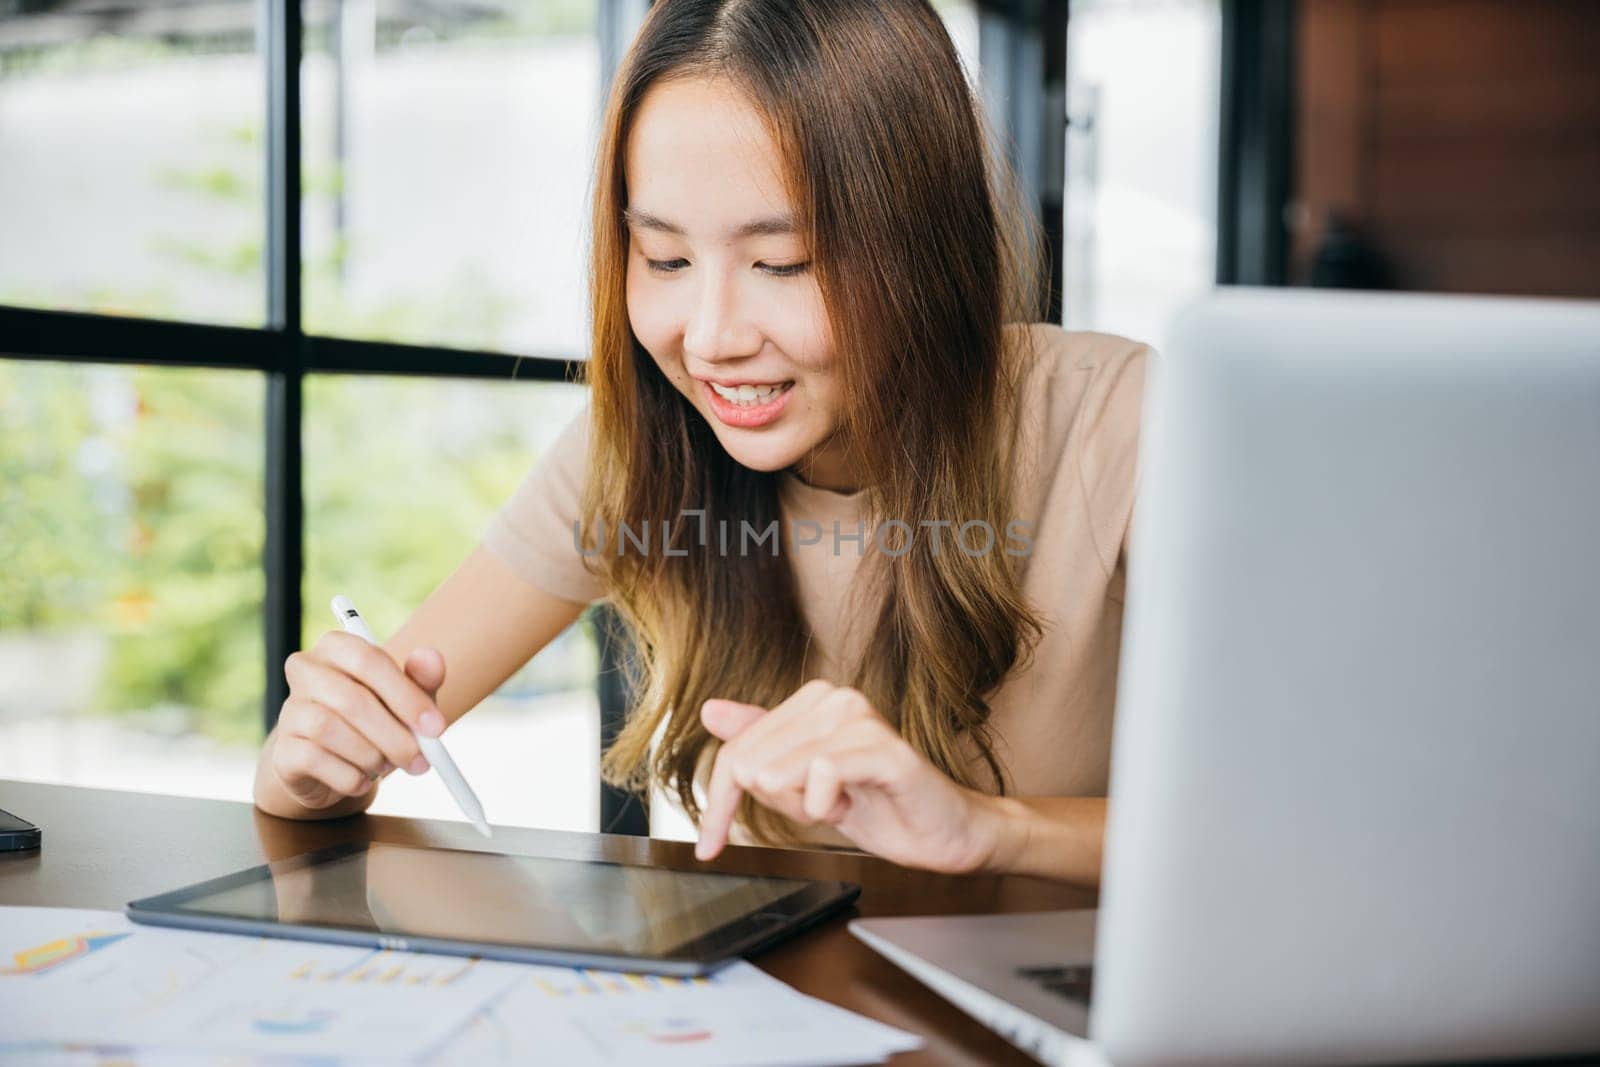 Smiling woman freelance artistic draw on screen by Sorapop